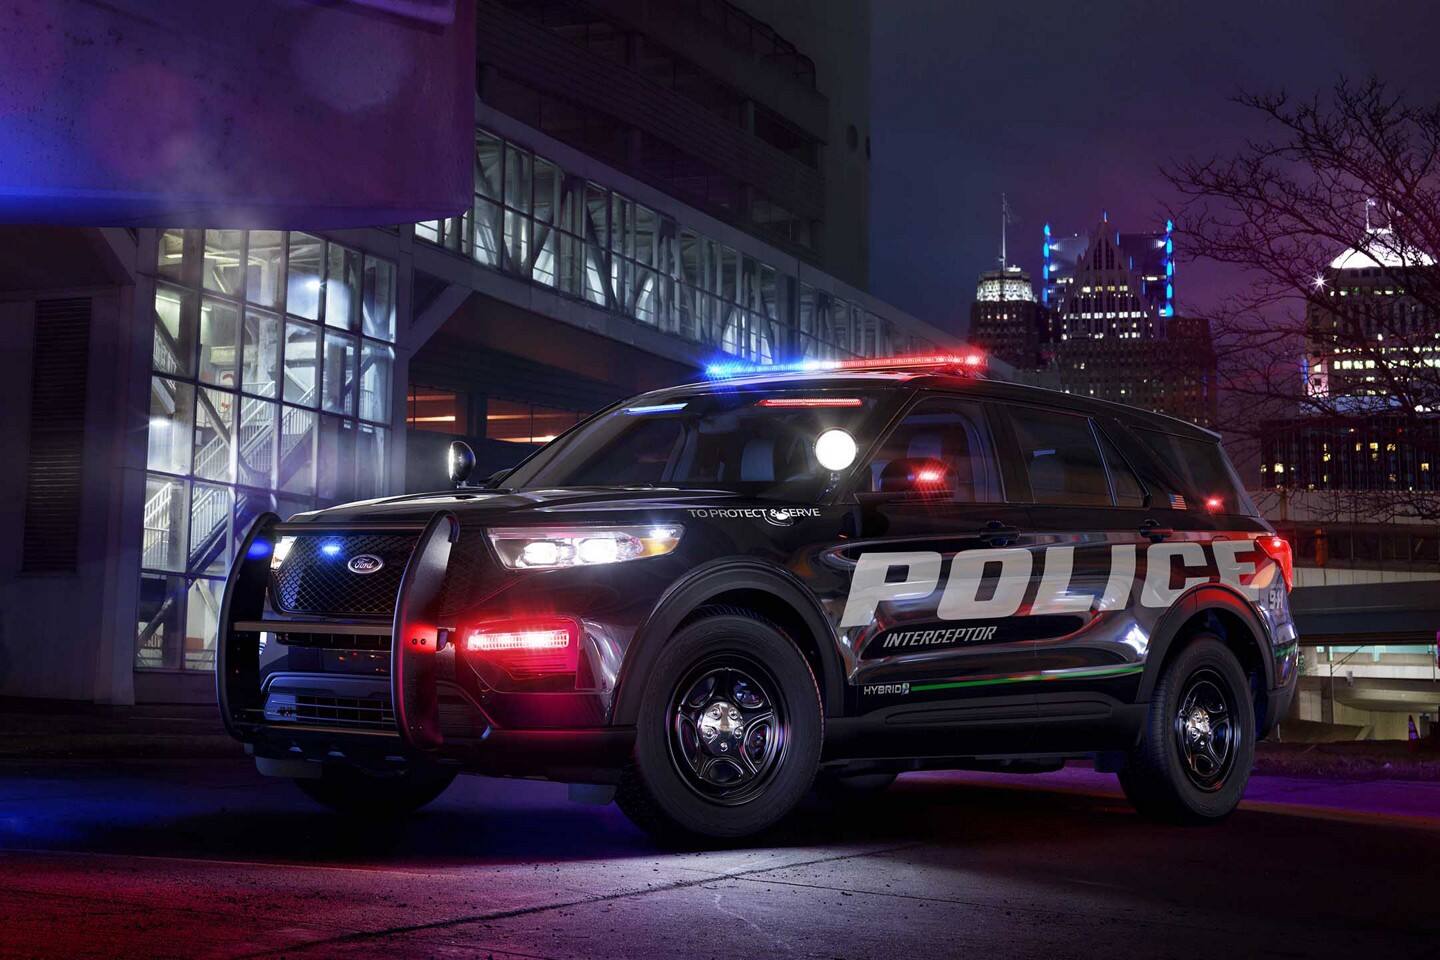 Ford police interceptor utility vehicle